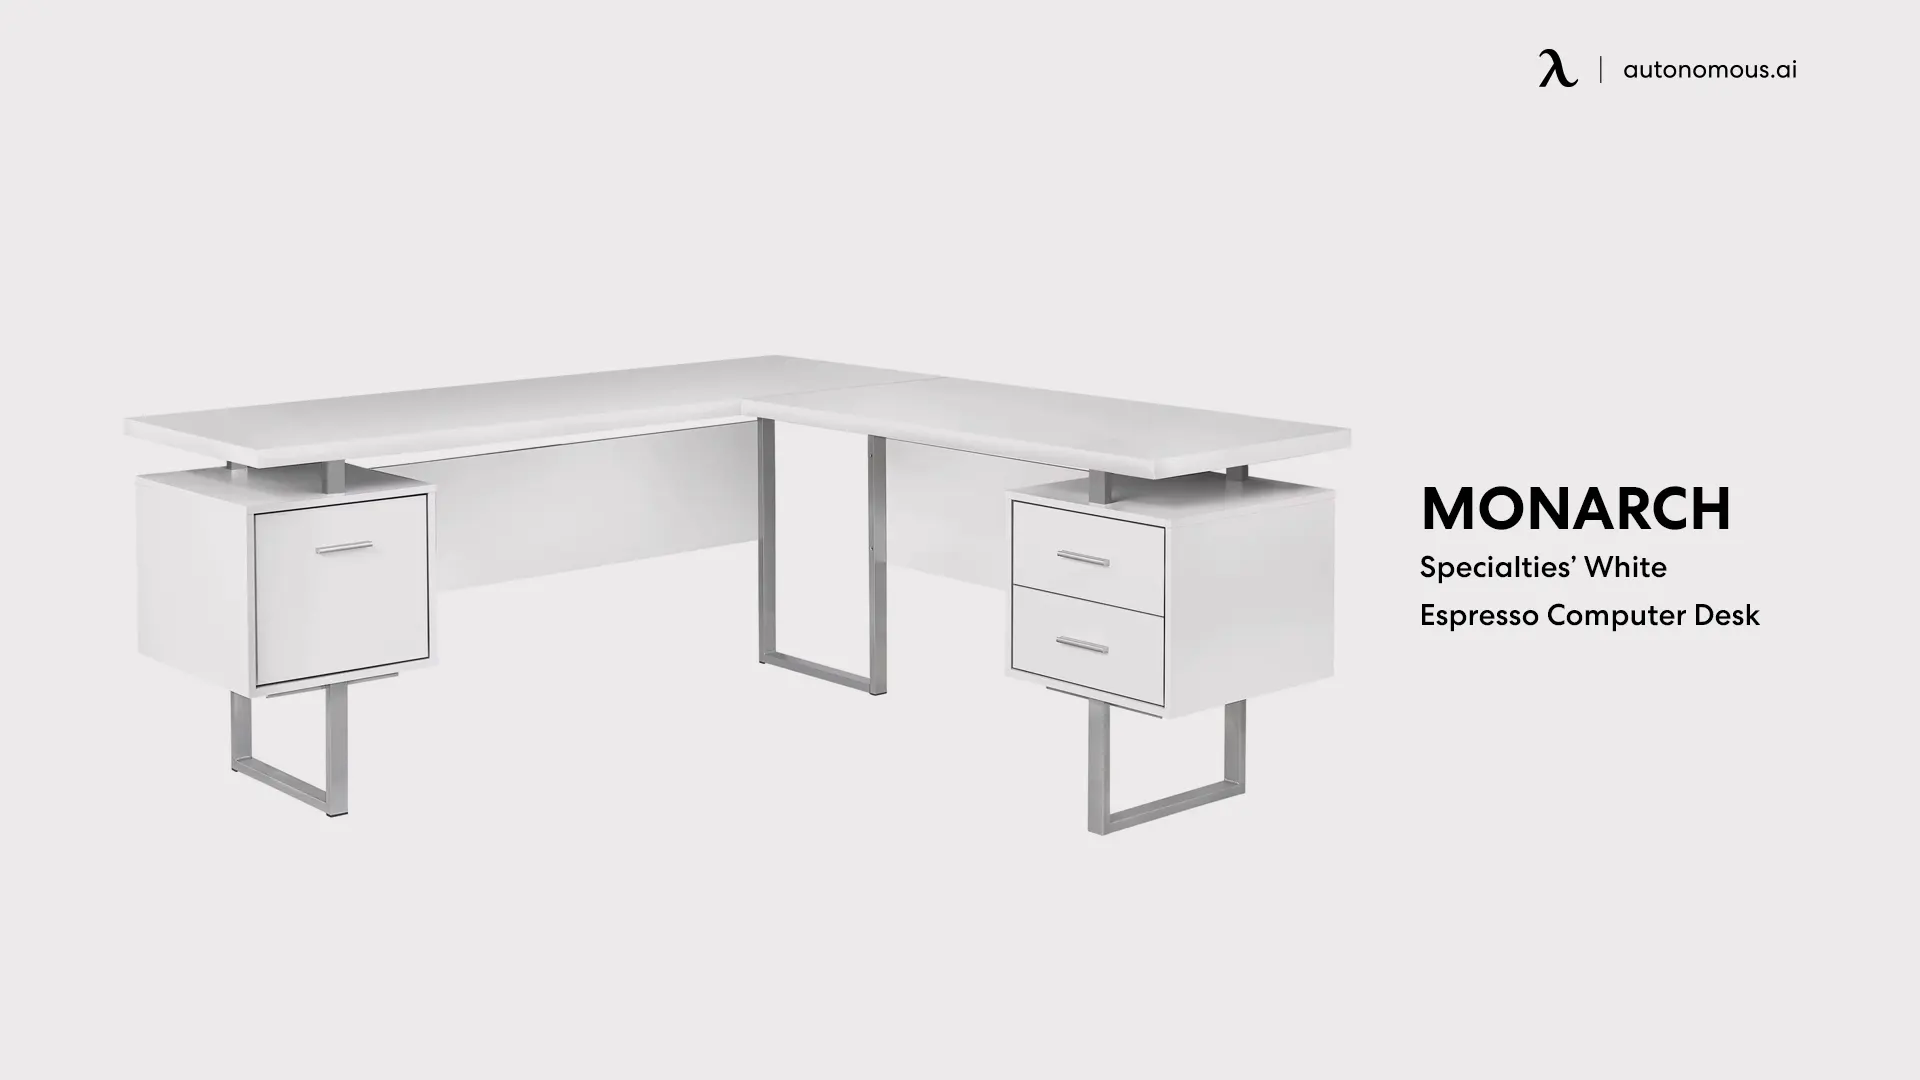 Monarch Specialties’ White Espresso Computer Desk